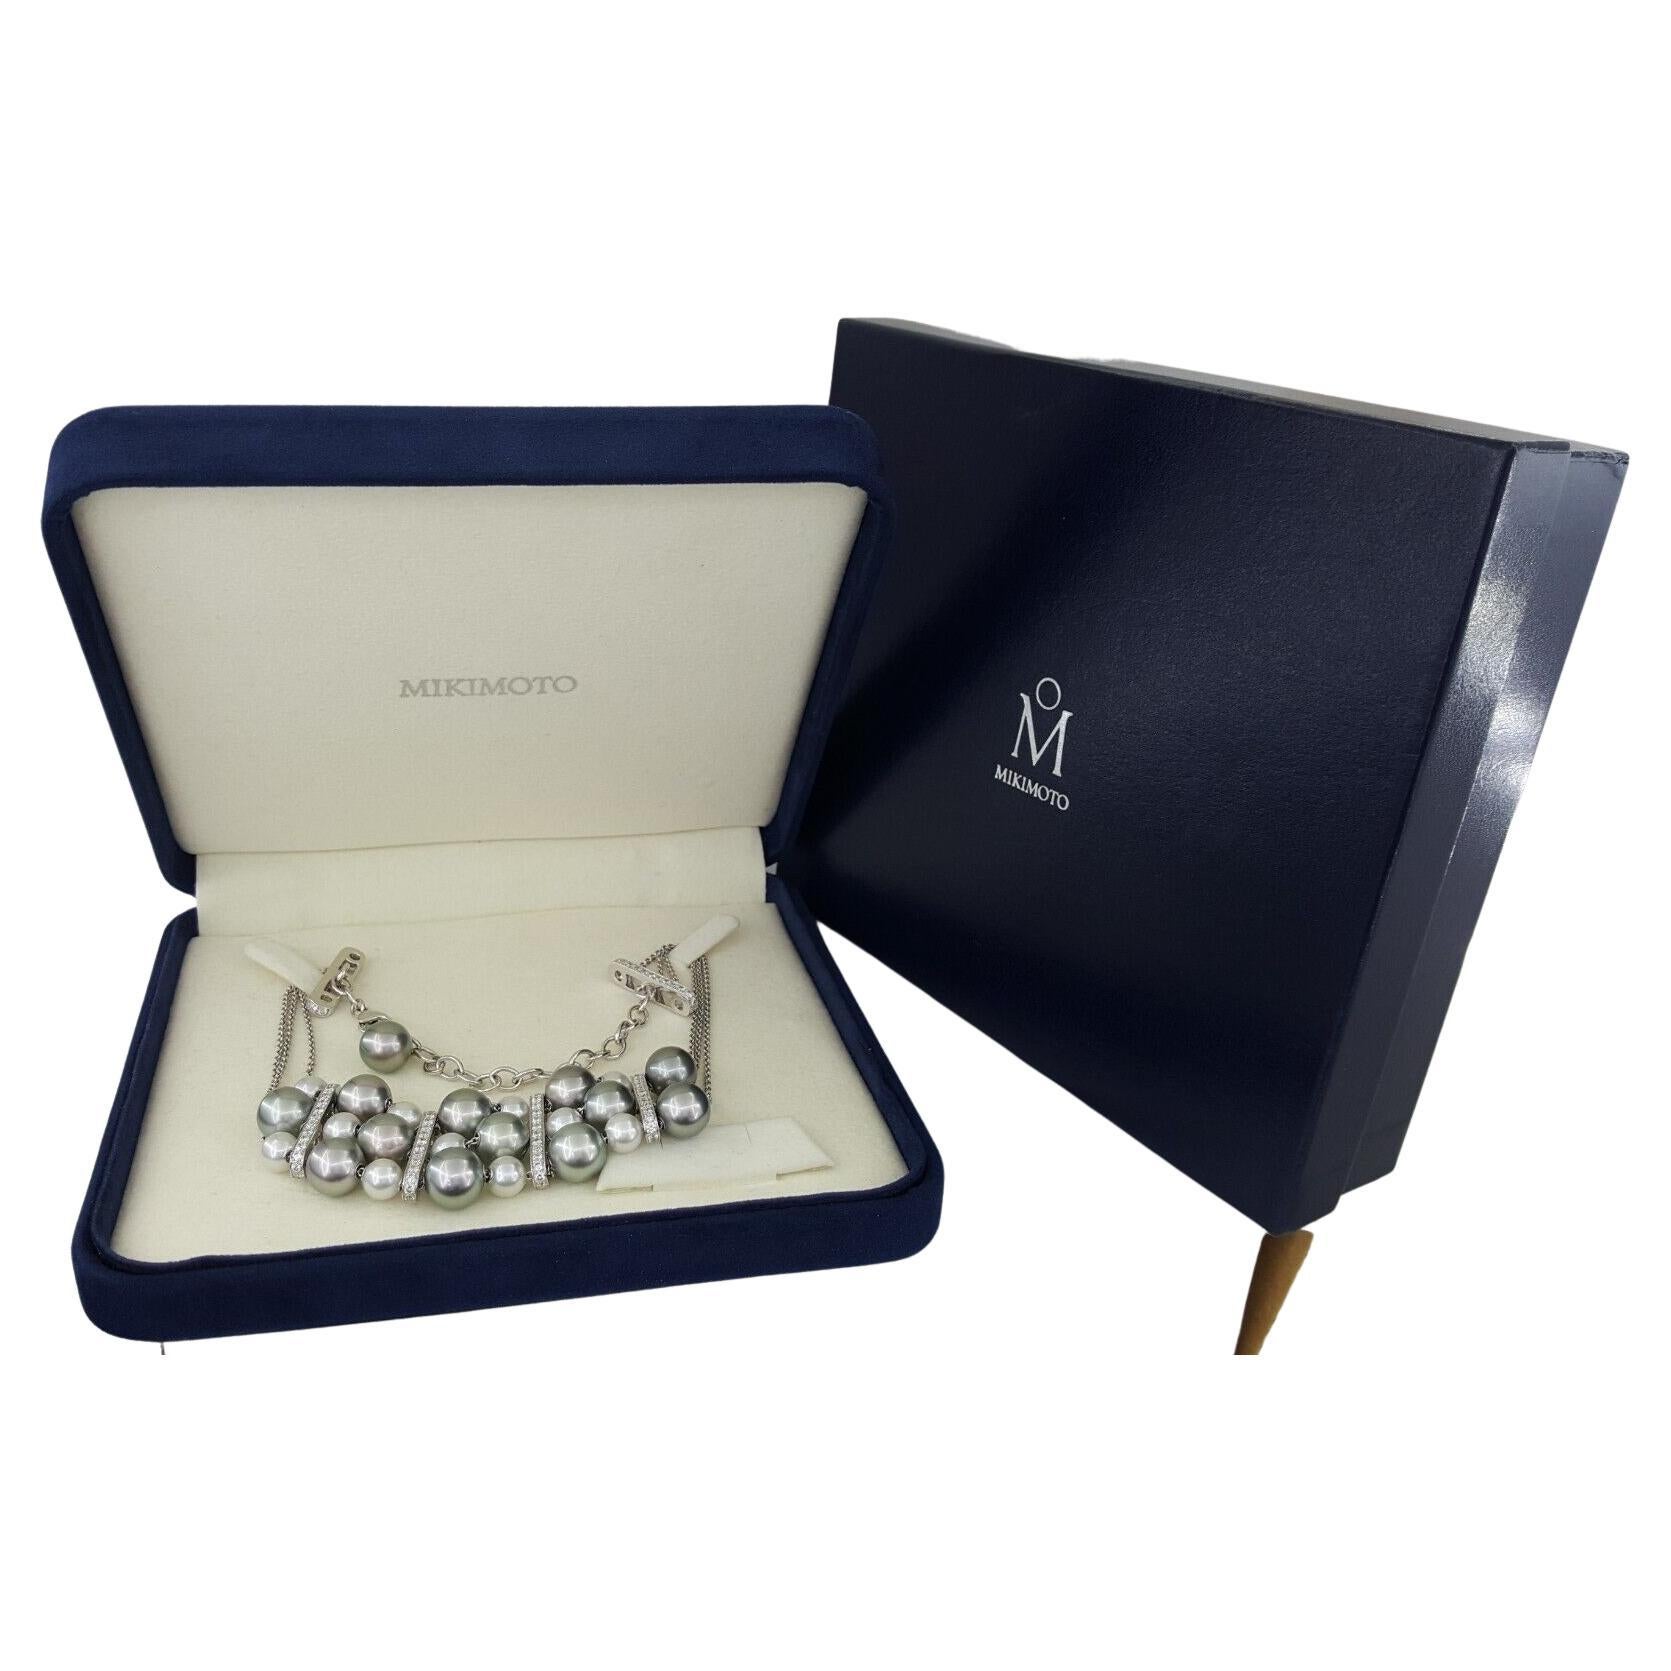 Mikimoto 18K White Gold 7.3-11.1 mm Grayish Silver & Cream Pearl 3-Strand Diamond Choker Necklace


